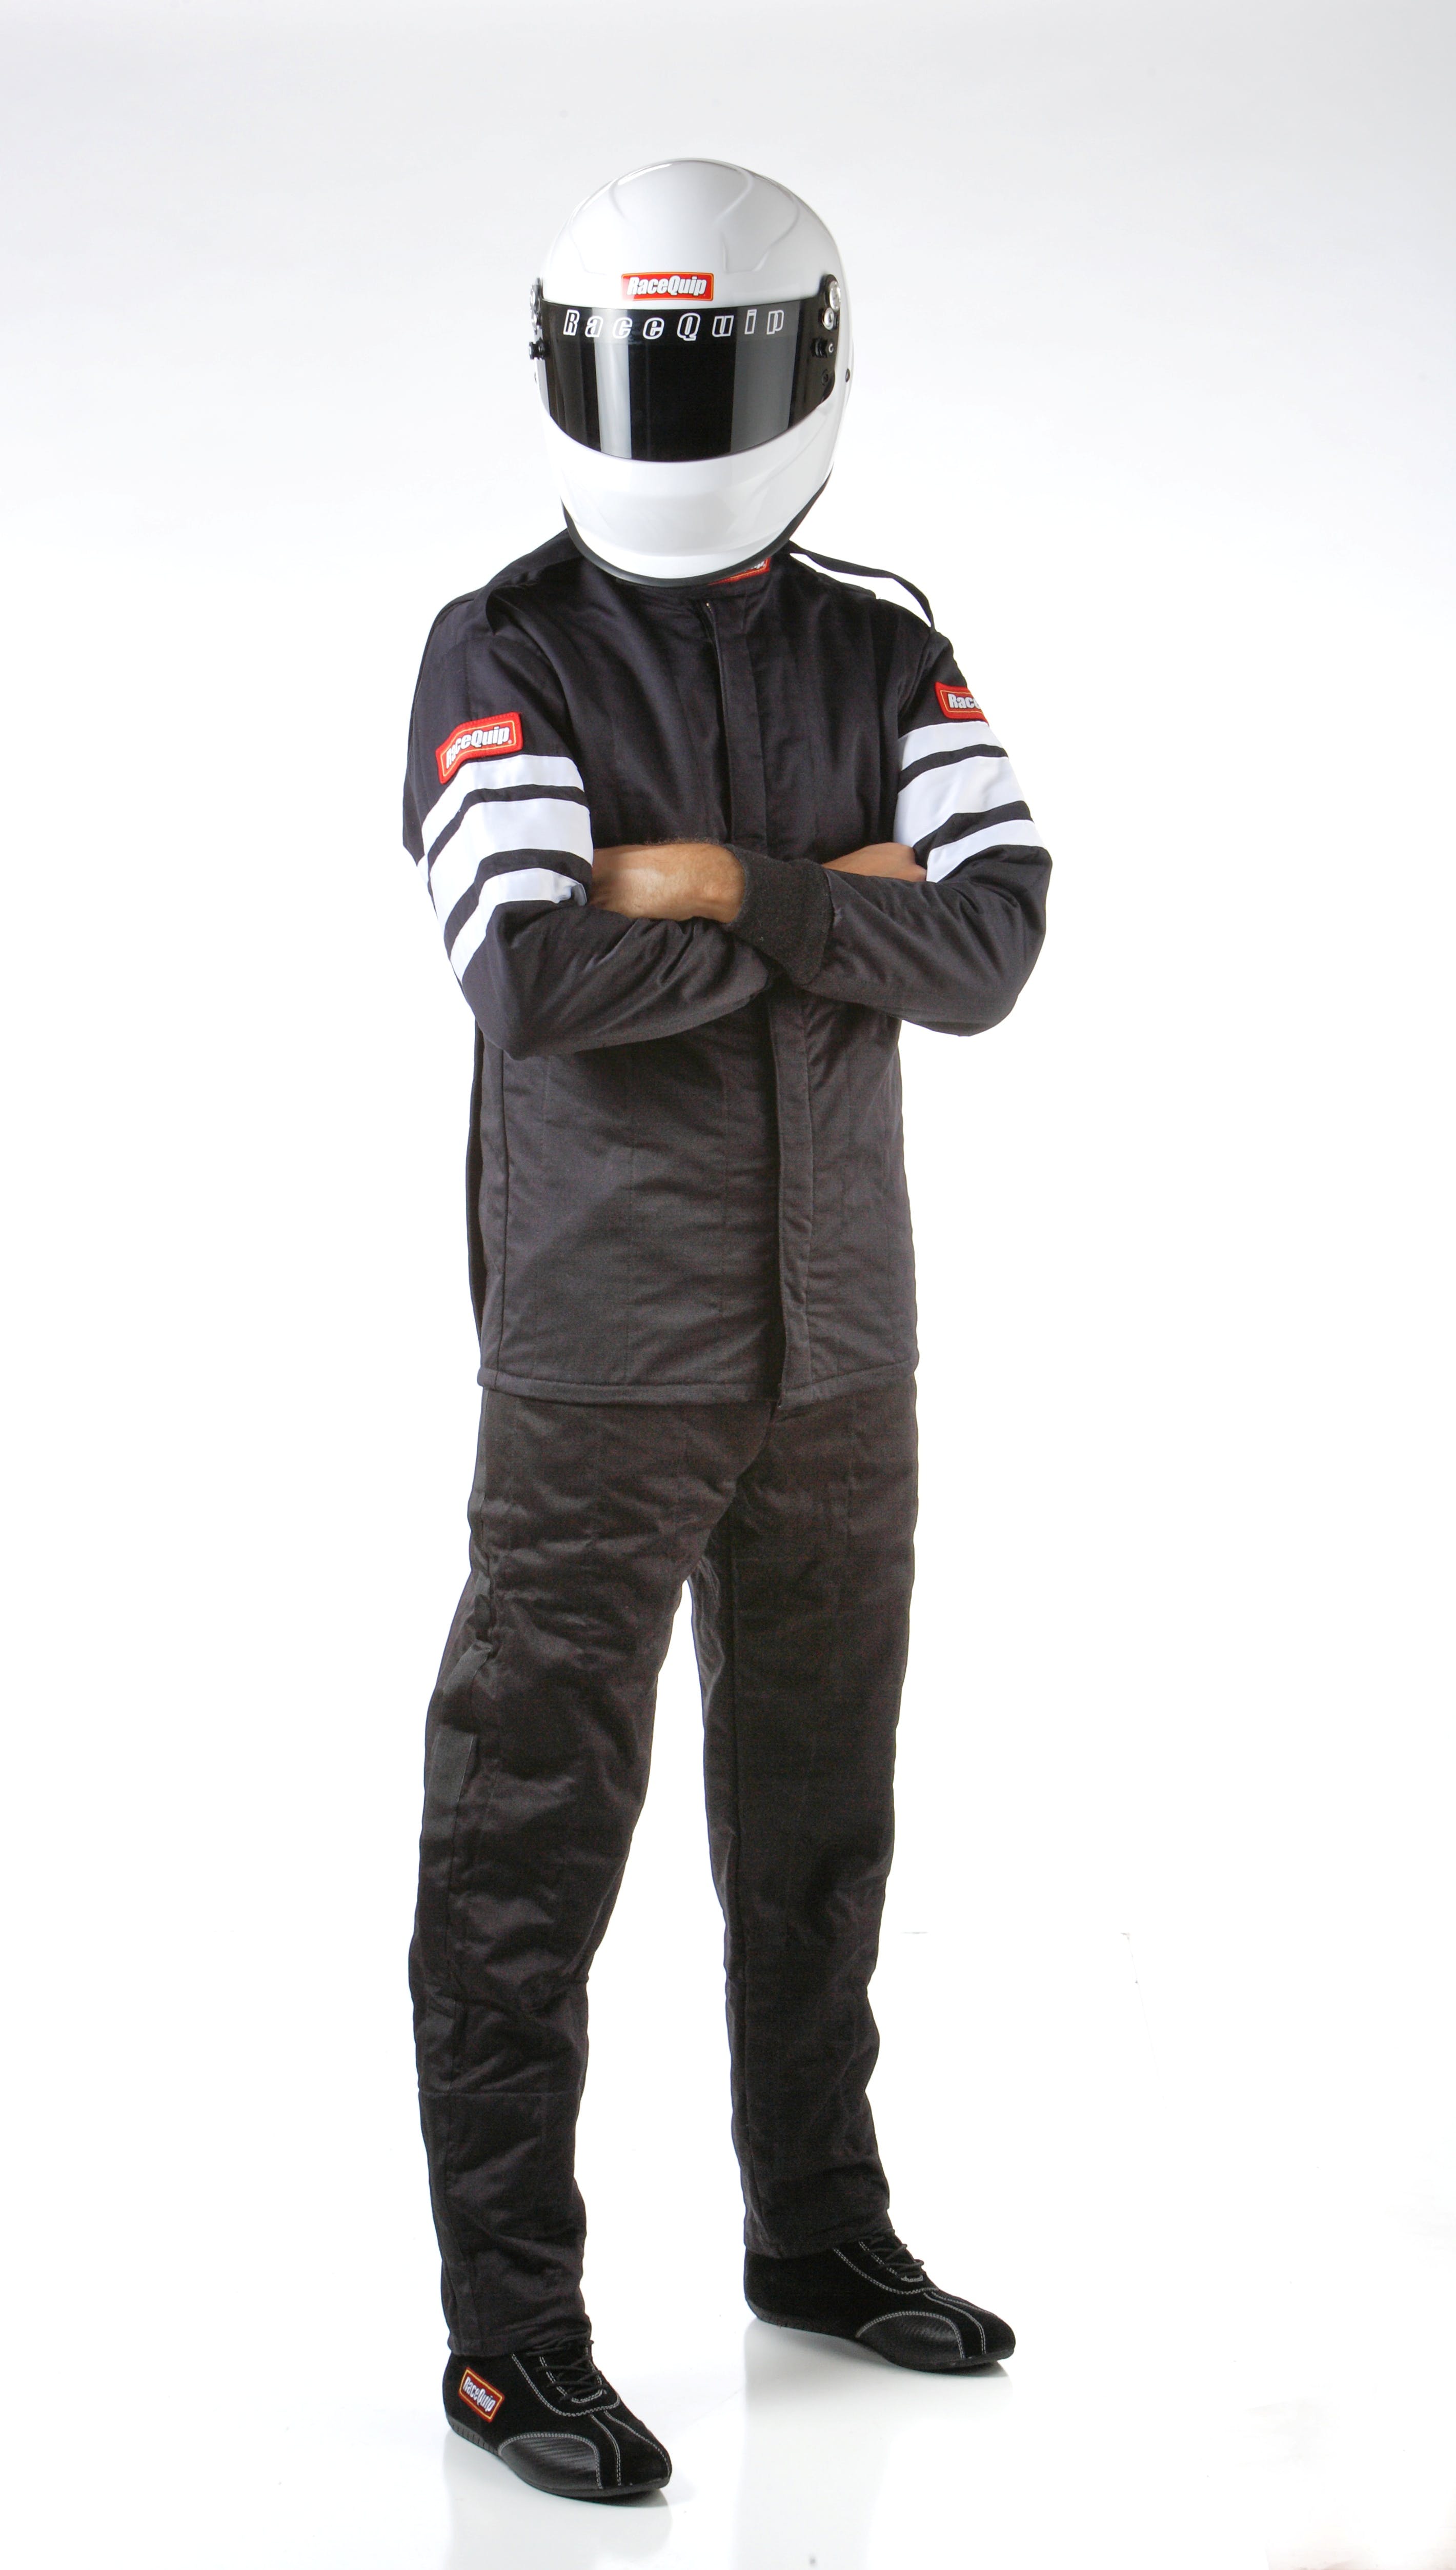 RaceQuip 121005 SFI-5 Pyrovatex Multi-Layer Racing Fire Jacket (Black, Large)